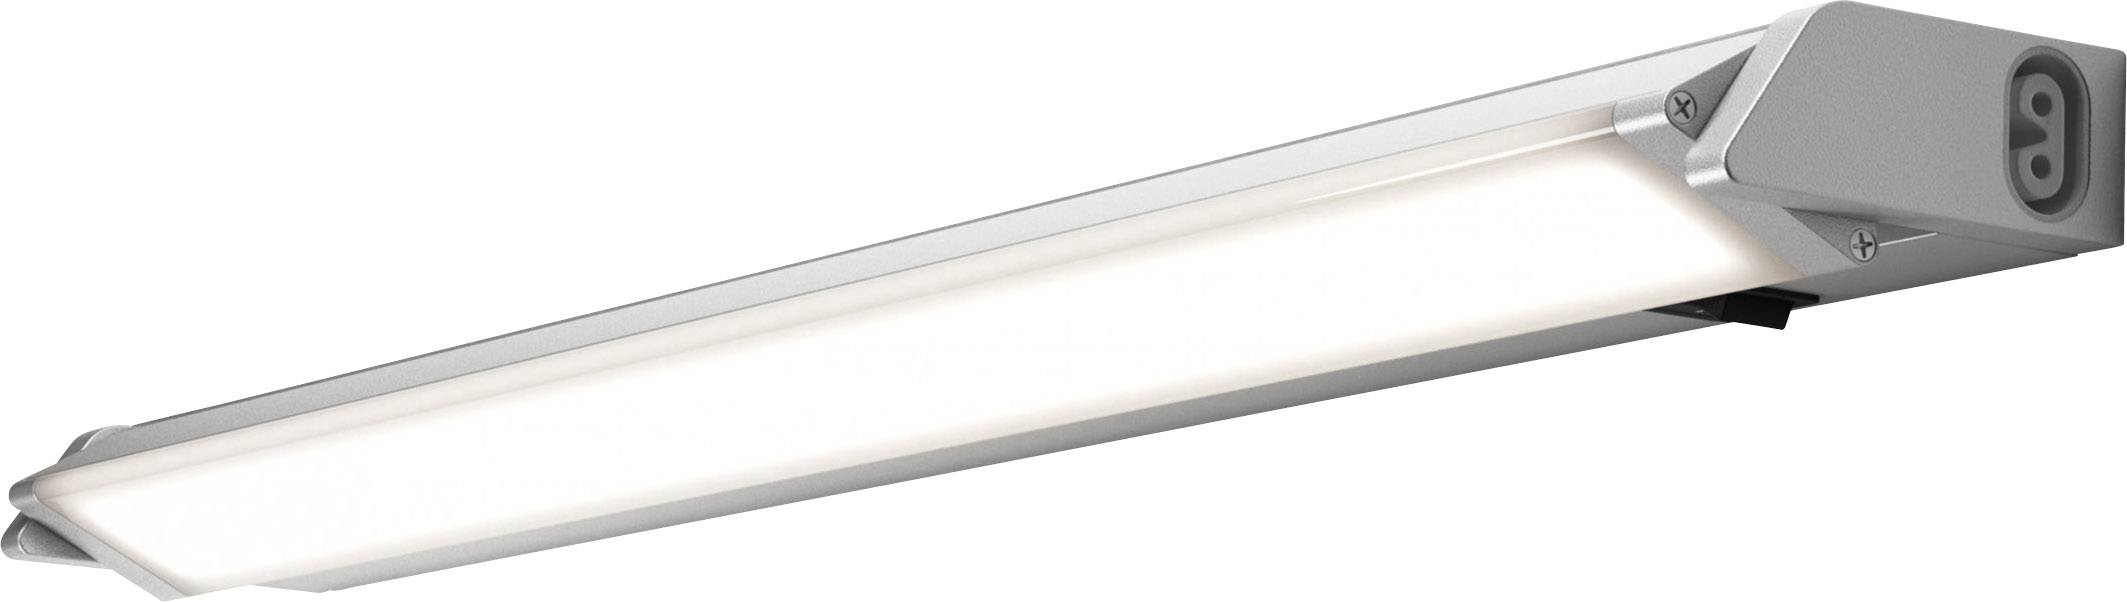 Staat Voorschrift commentator LEDVANCE Linear LED Turn L LED plinth lighting LED (monochrome) Built-in LED  6 W Warm white Silver | Conrad.com